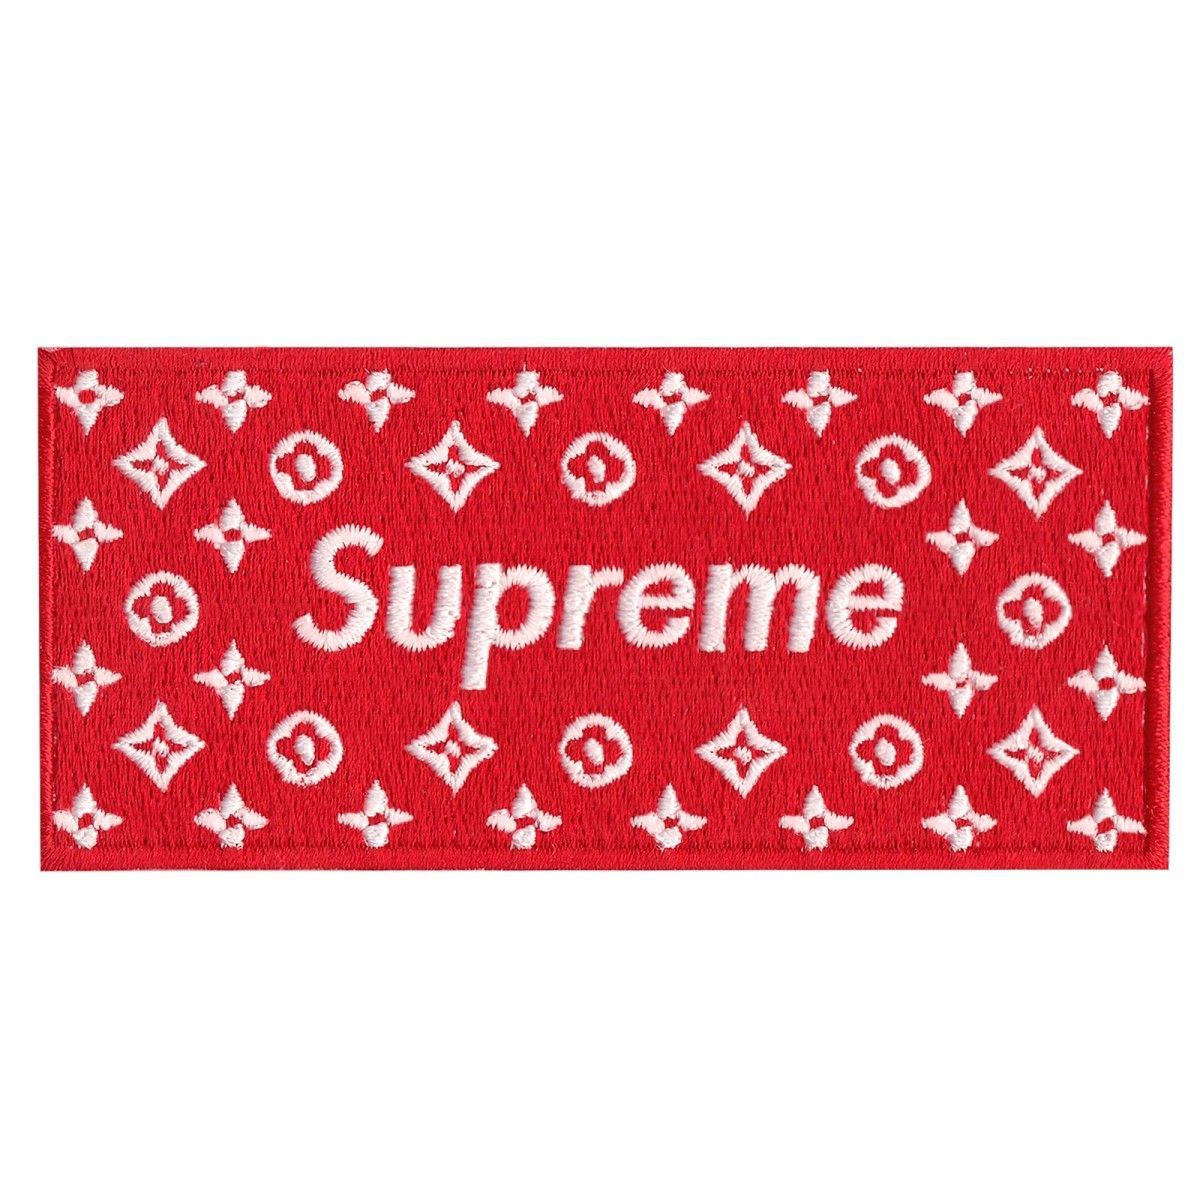 Supreme x Louis Vuitton Box Logo T Shirt  Olivers Archive